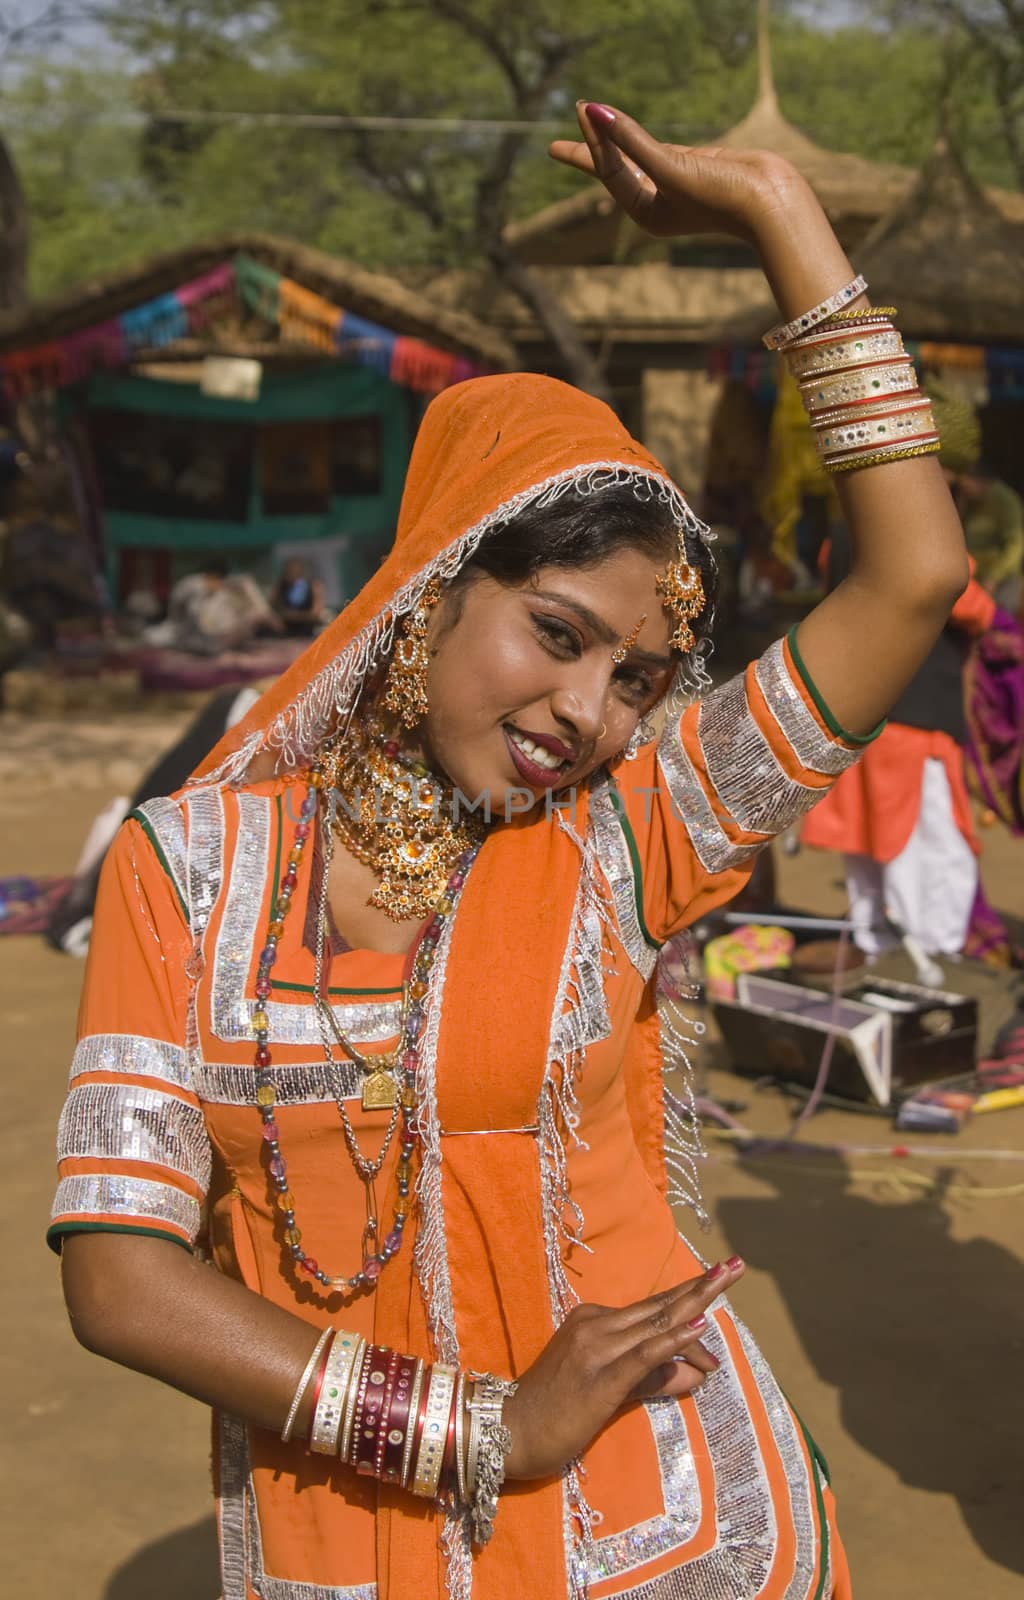 Tribal Dancer in Orange by JeremyRichards